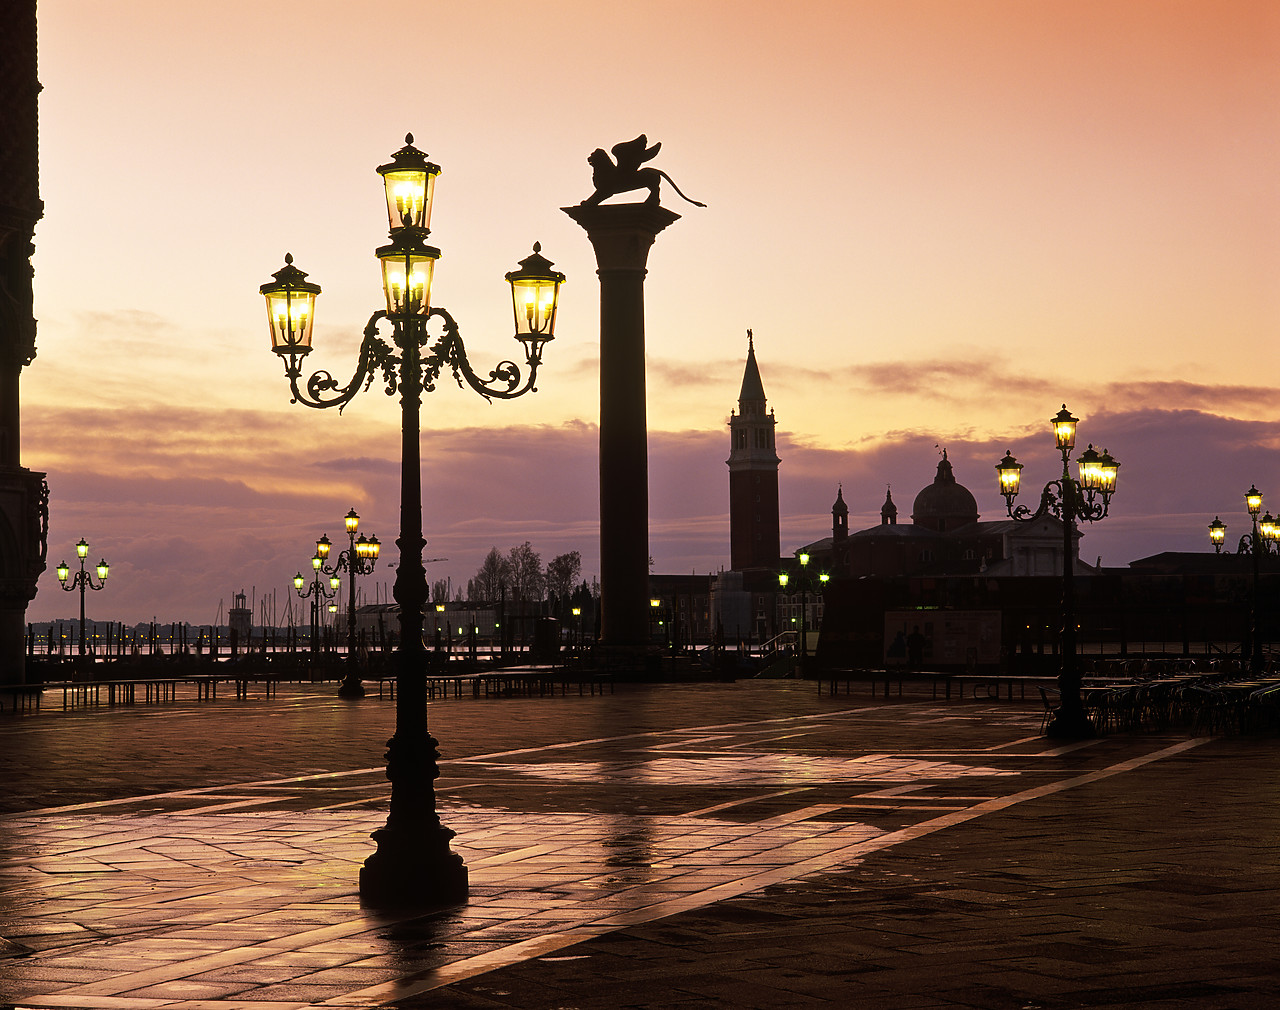 #030449-1 - St. Mark's Square at Sunrise, Venice, Italy